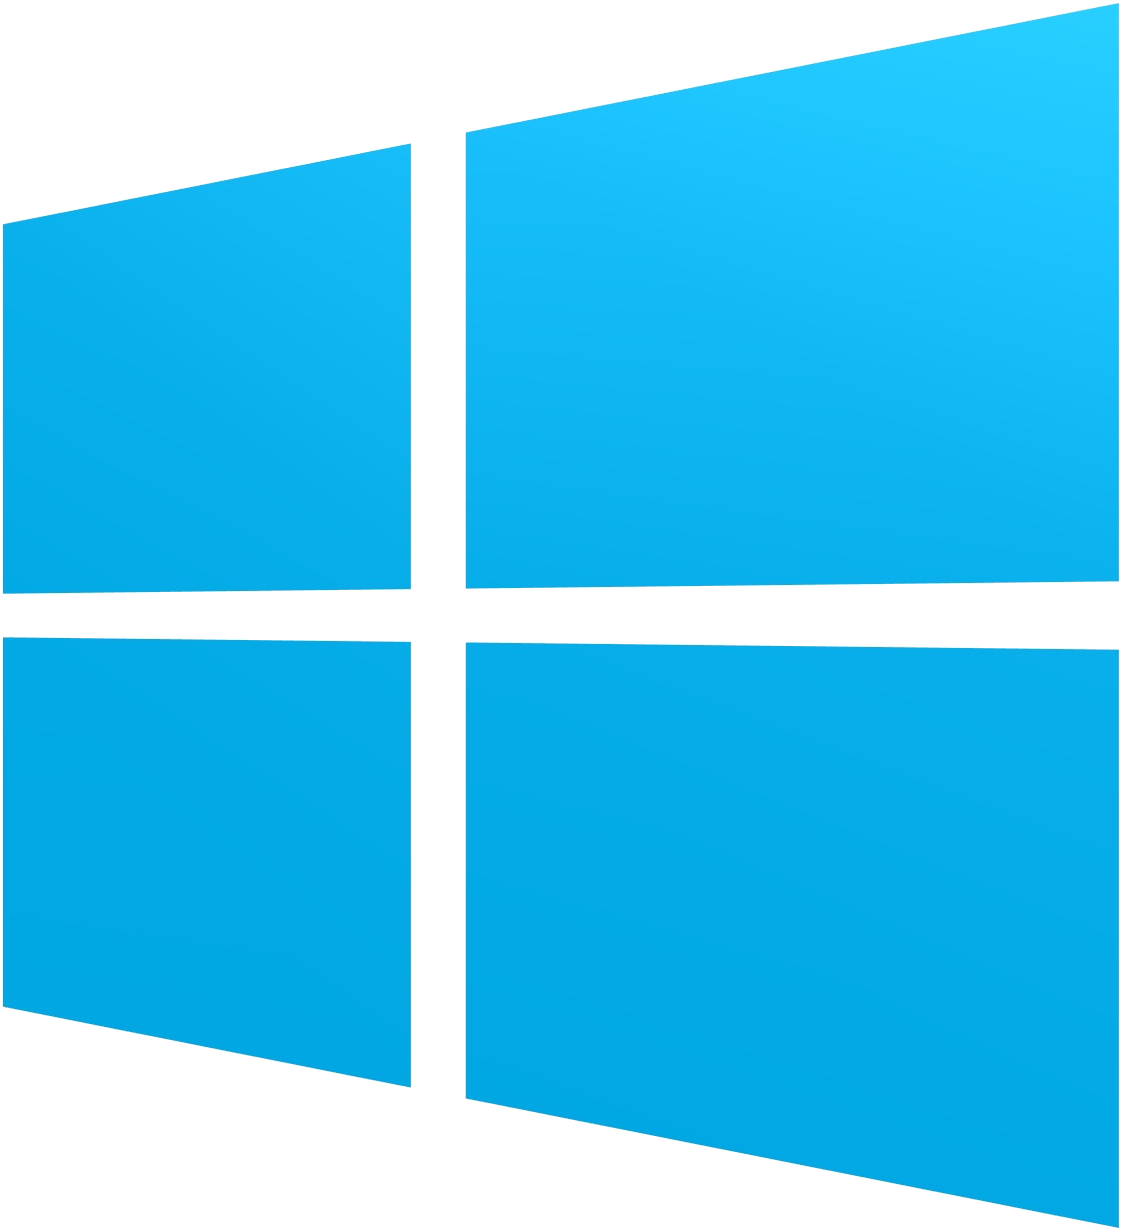 7 Windows Shortcuts to Improve Productivity